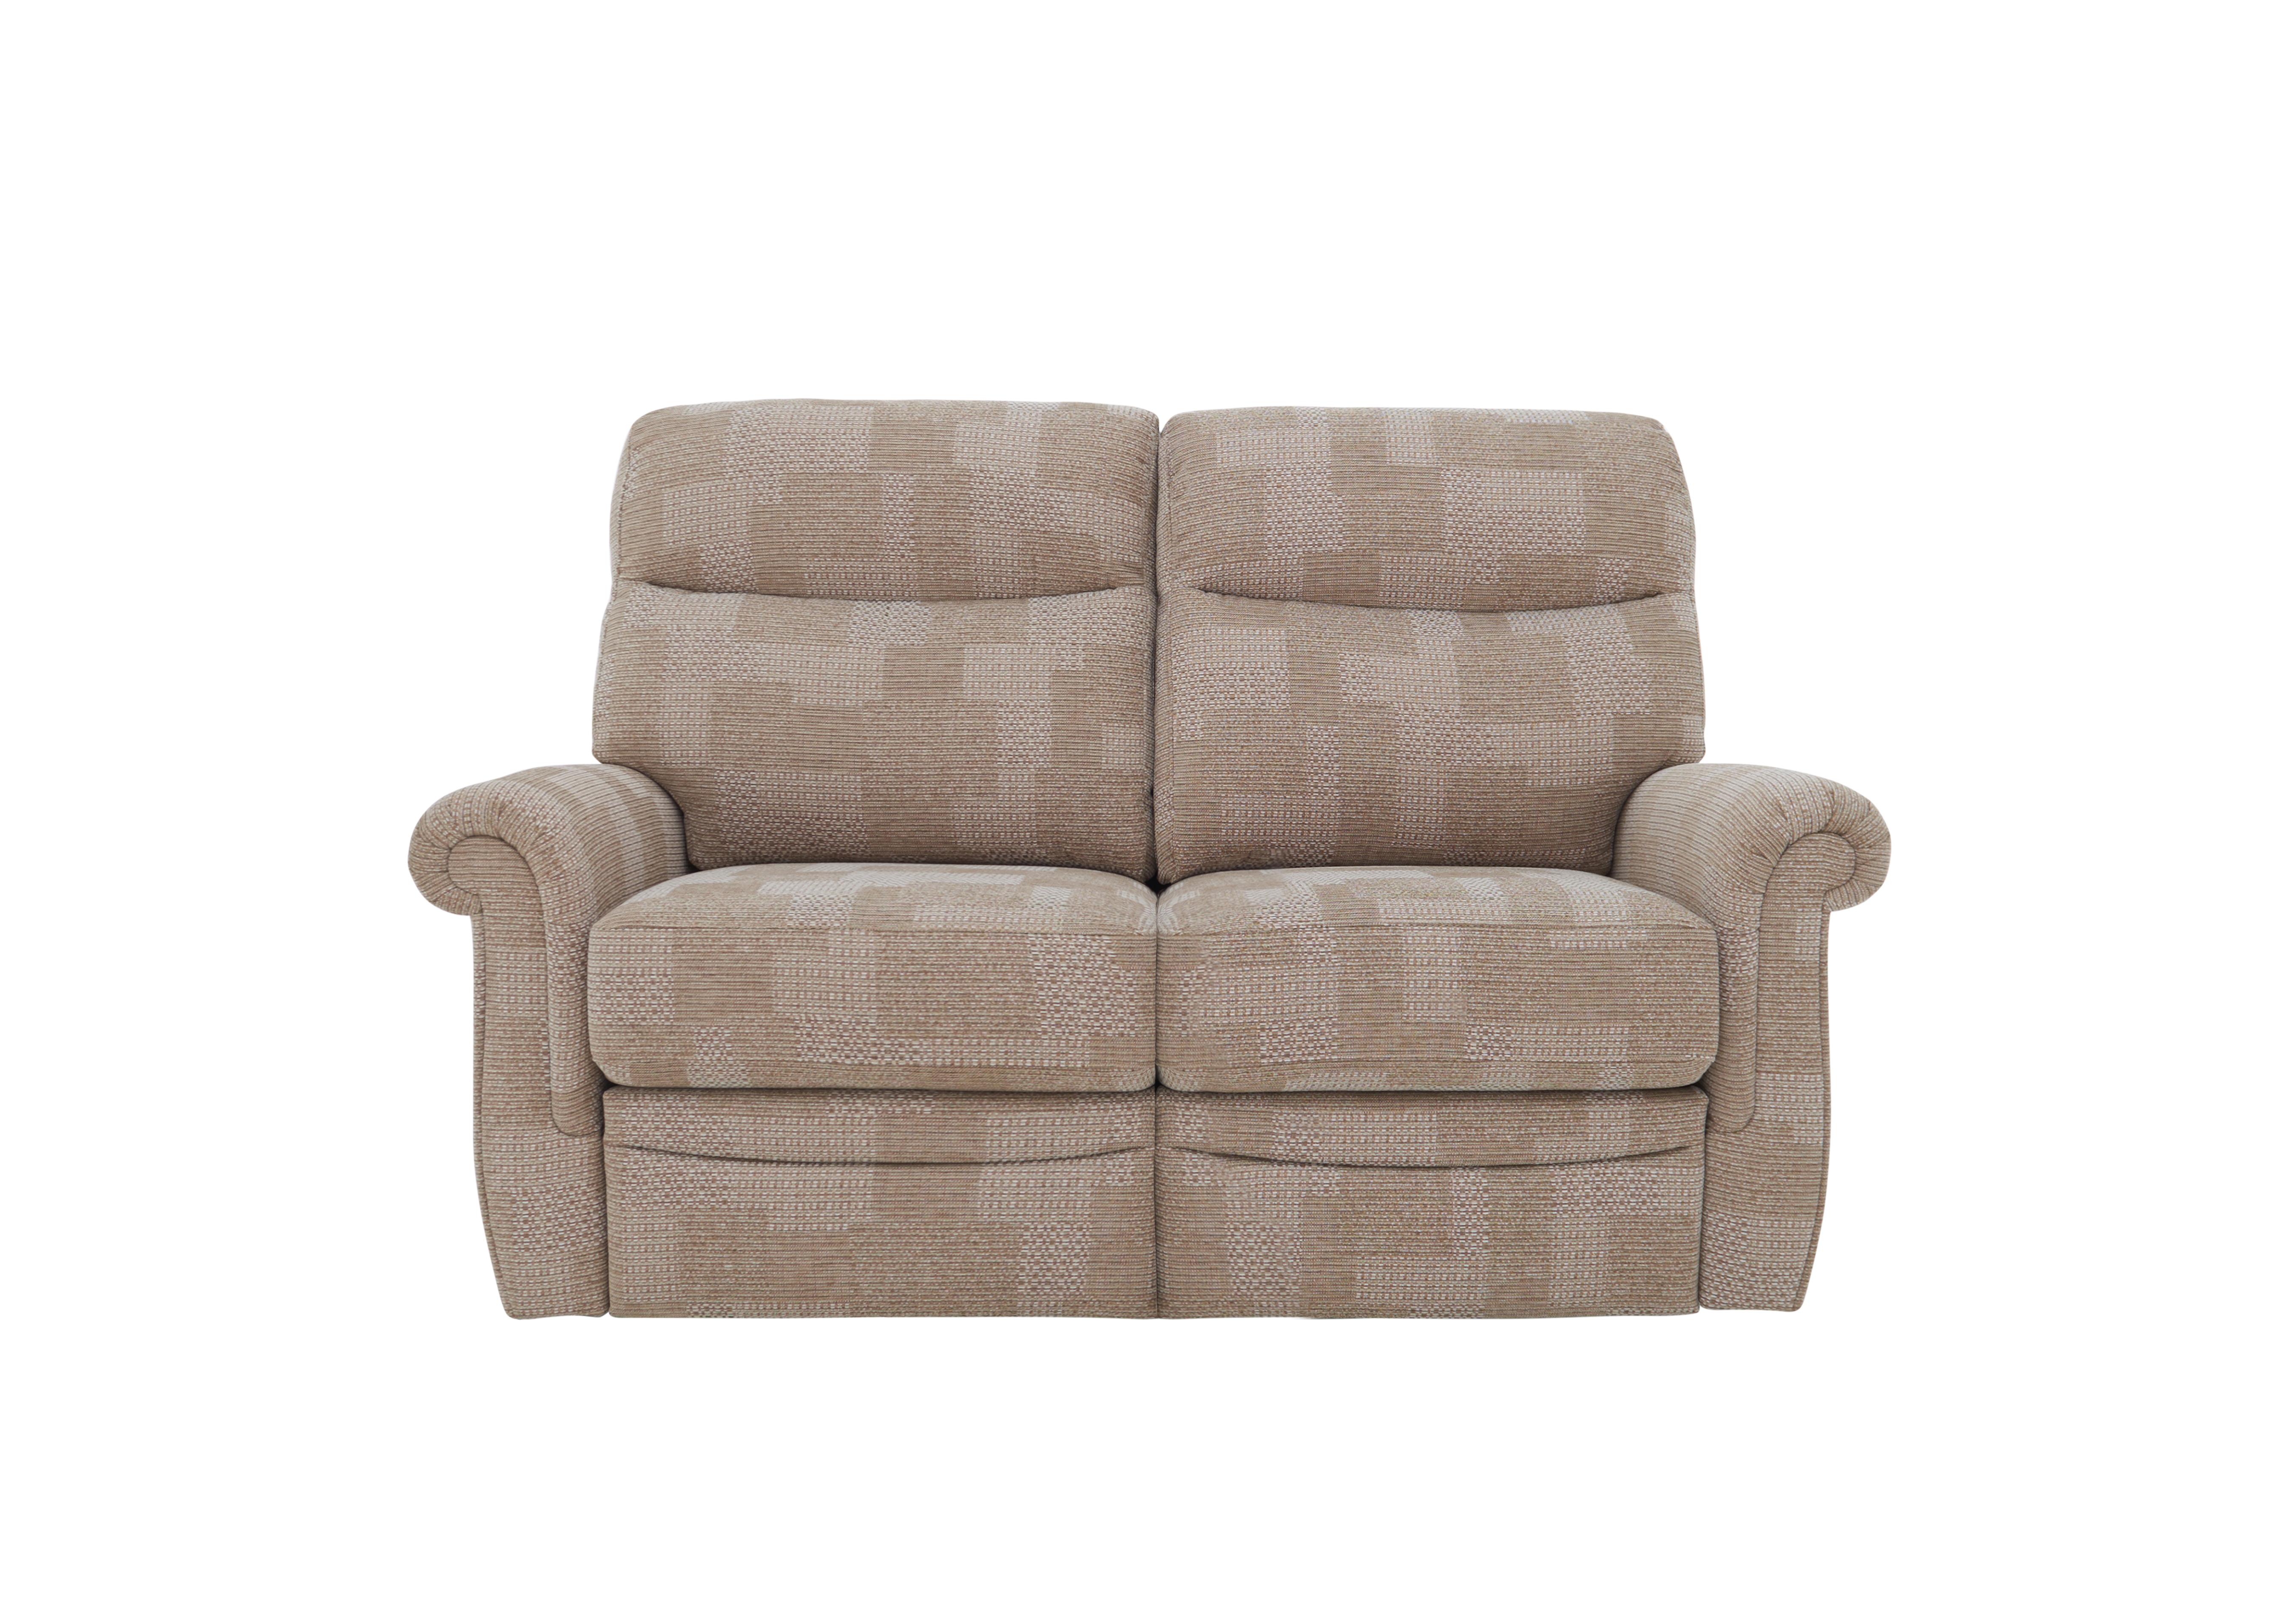 Avon 2 Seater Fabric Sofa in A800 Faro Sand on Furniture Village